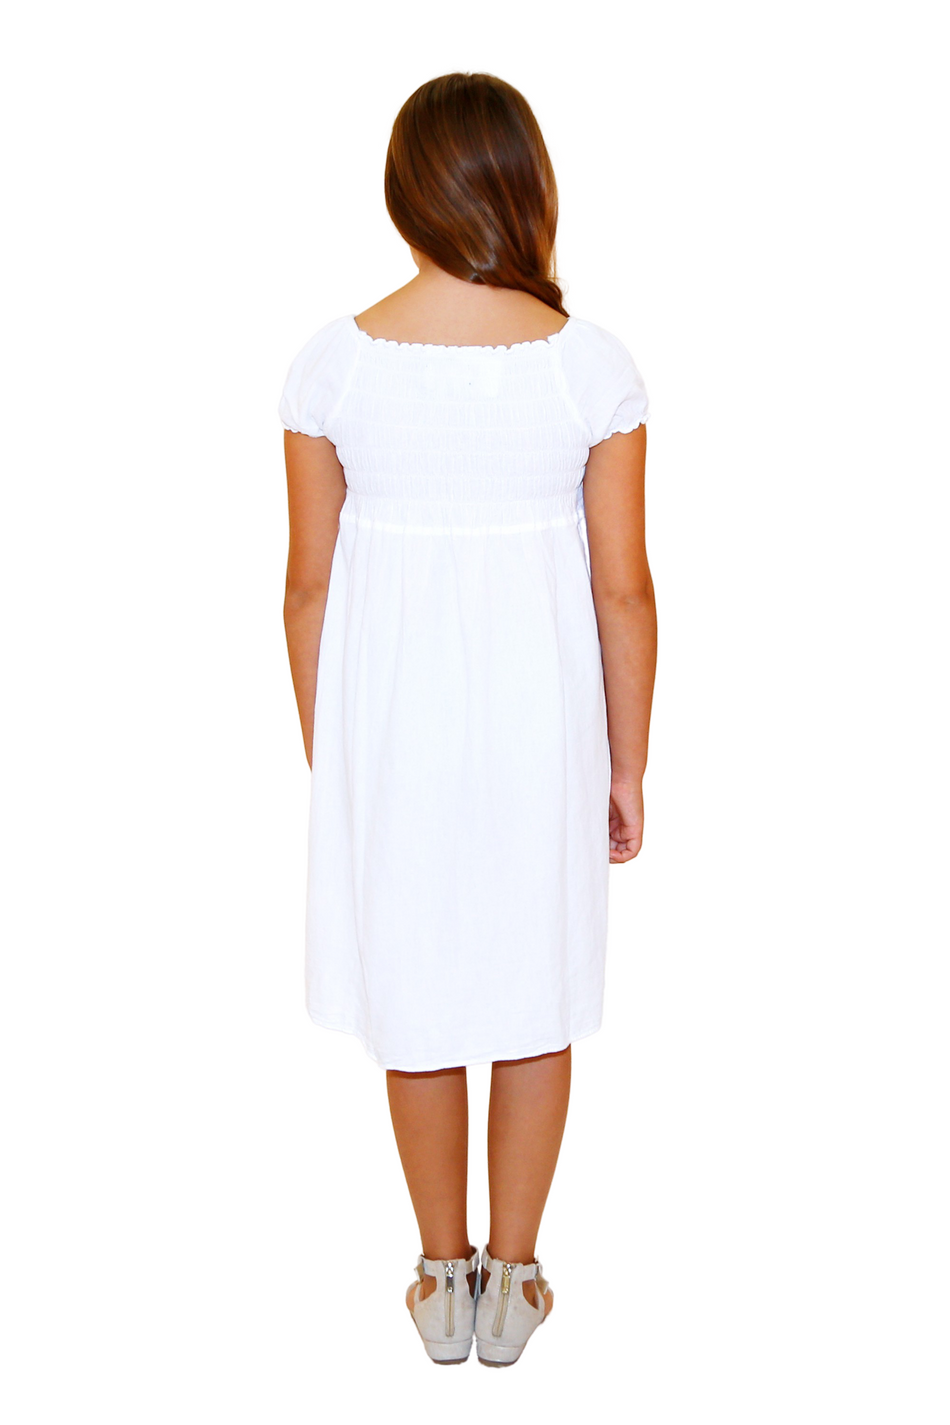 G1003 - White Cotton Dress